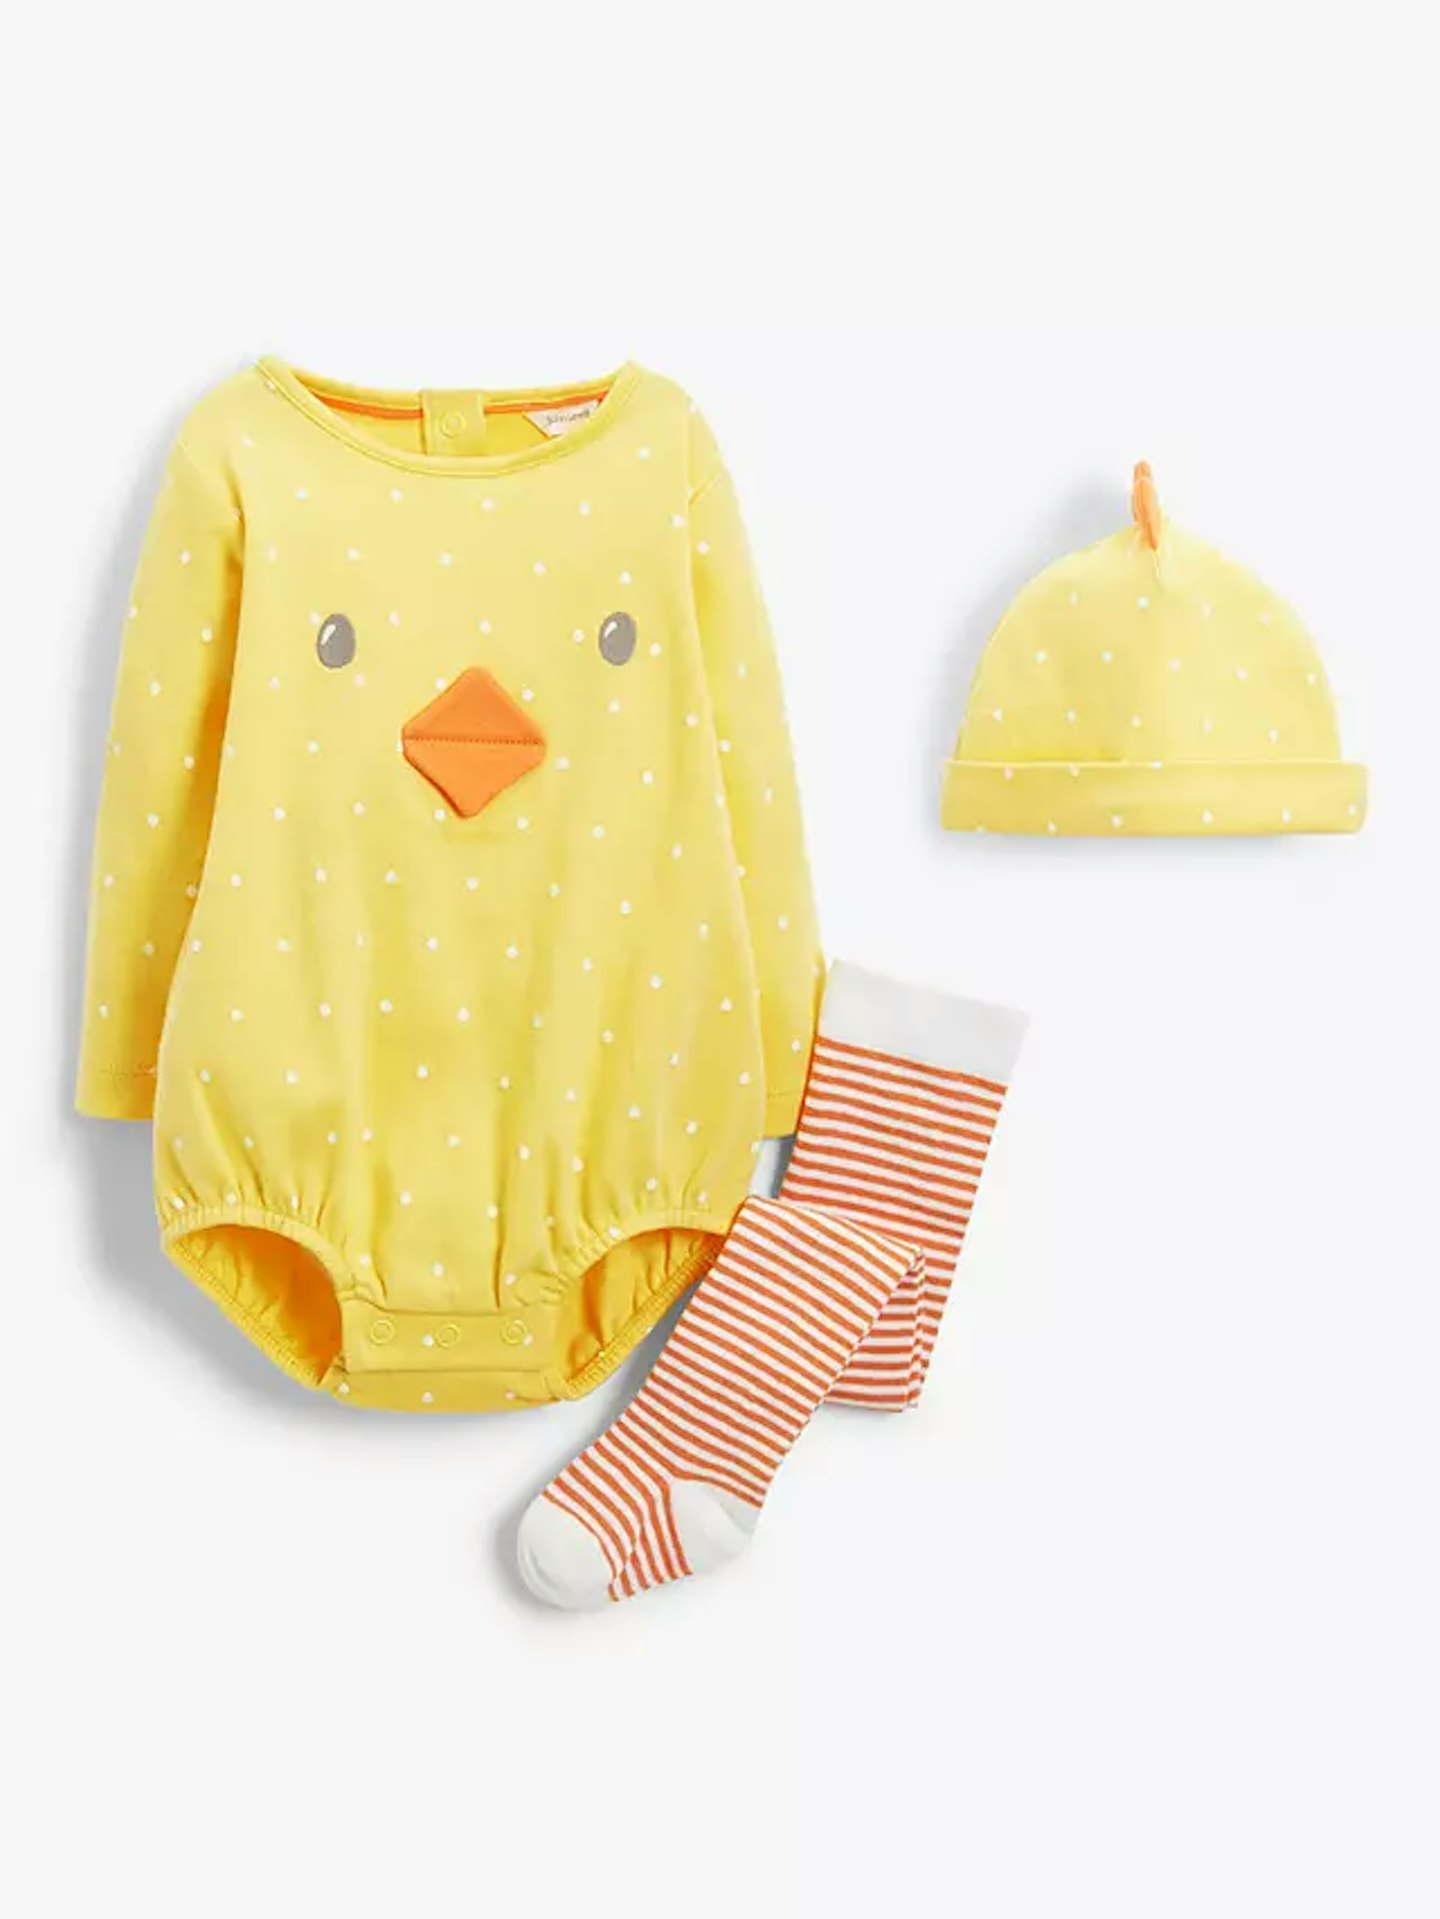 Baby Organic Cotton Chick Romper, Hat & Socks Set